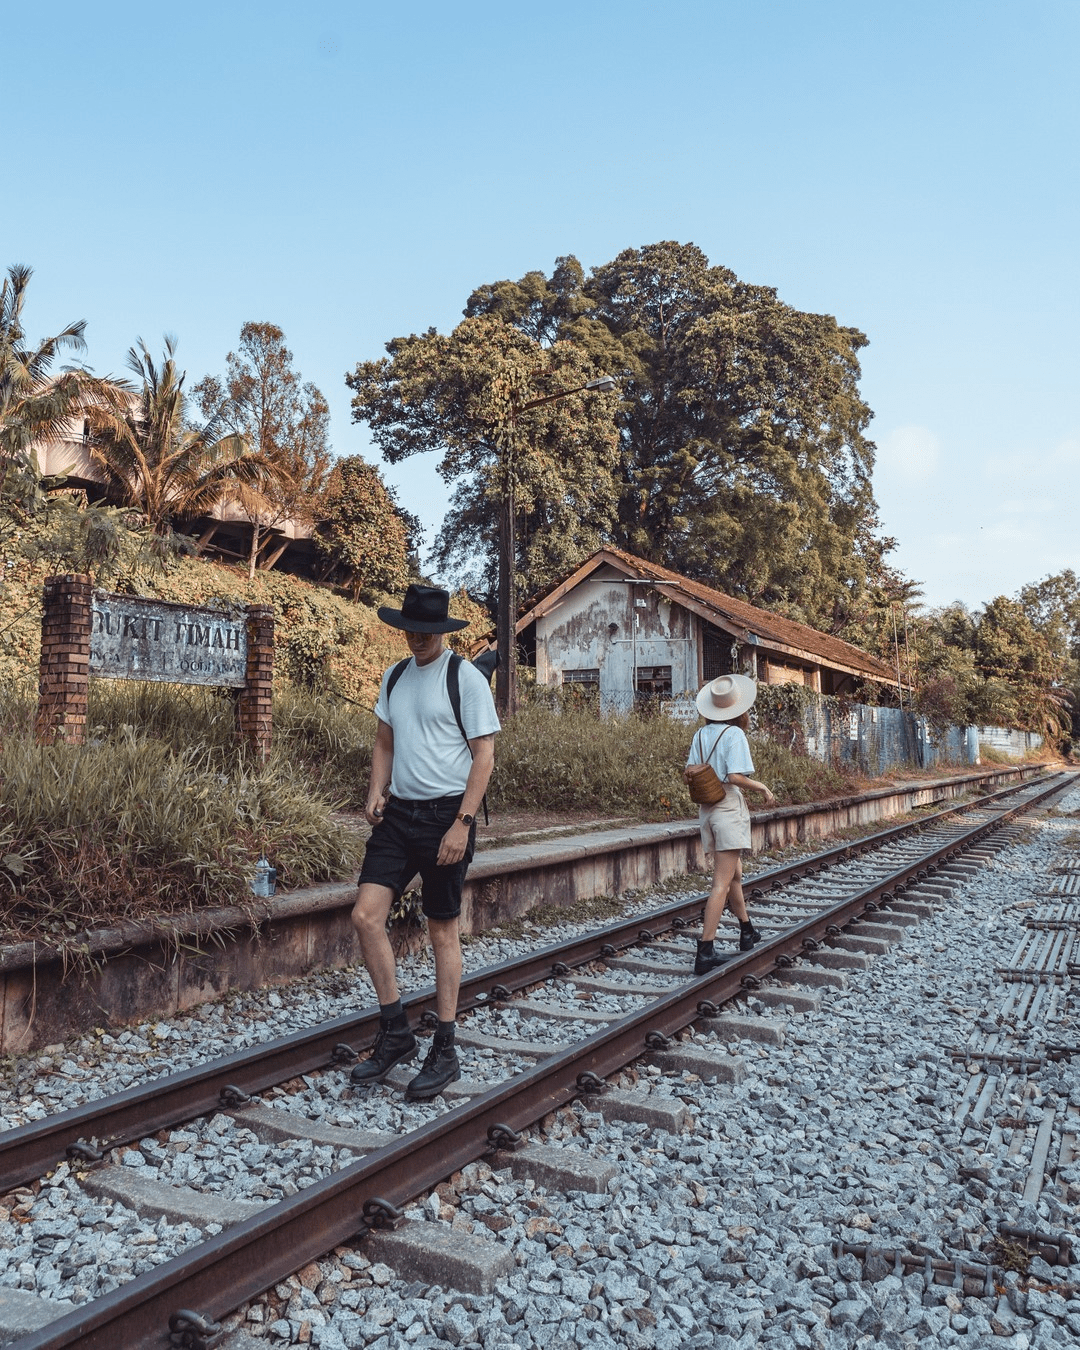 bukit timah railway station train tracks